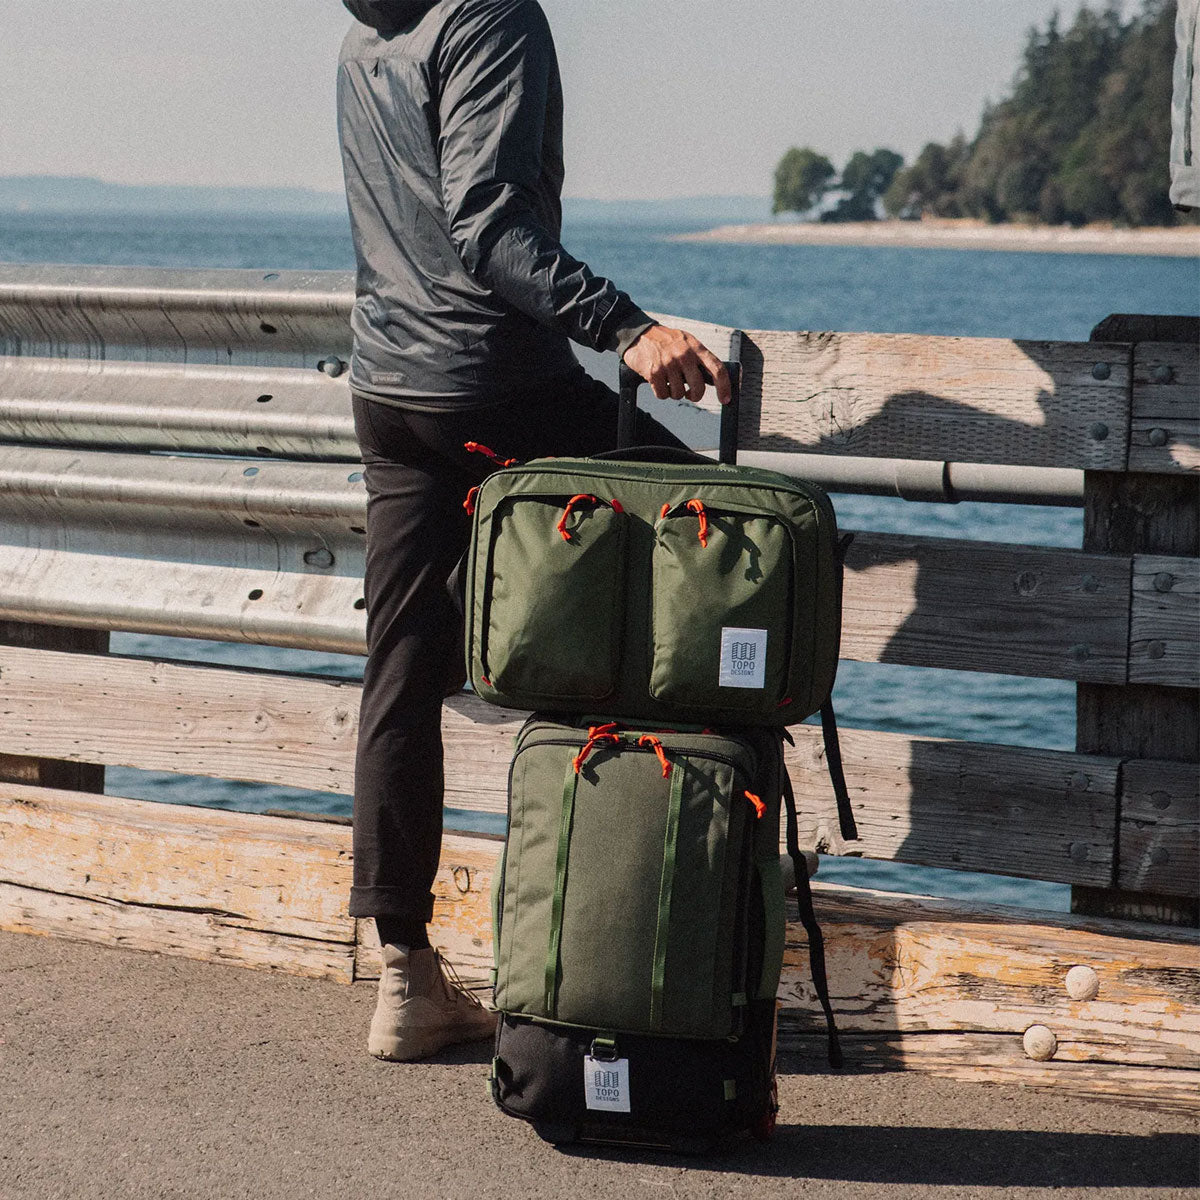 Topo Designs : Global Travel Bag Roller 44L : Navy/Navy